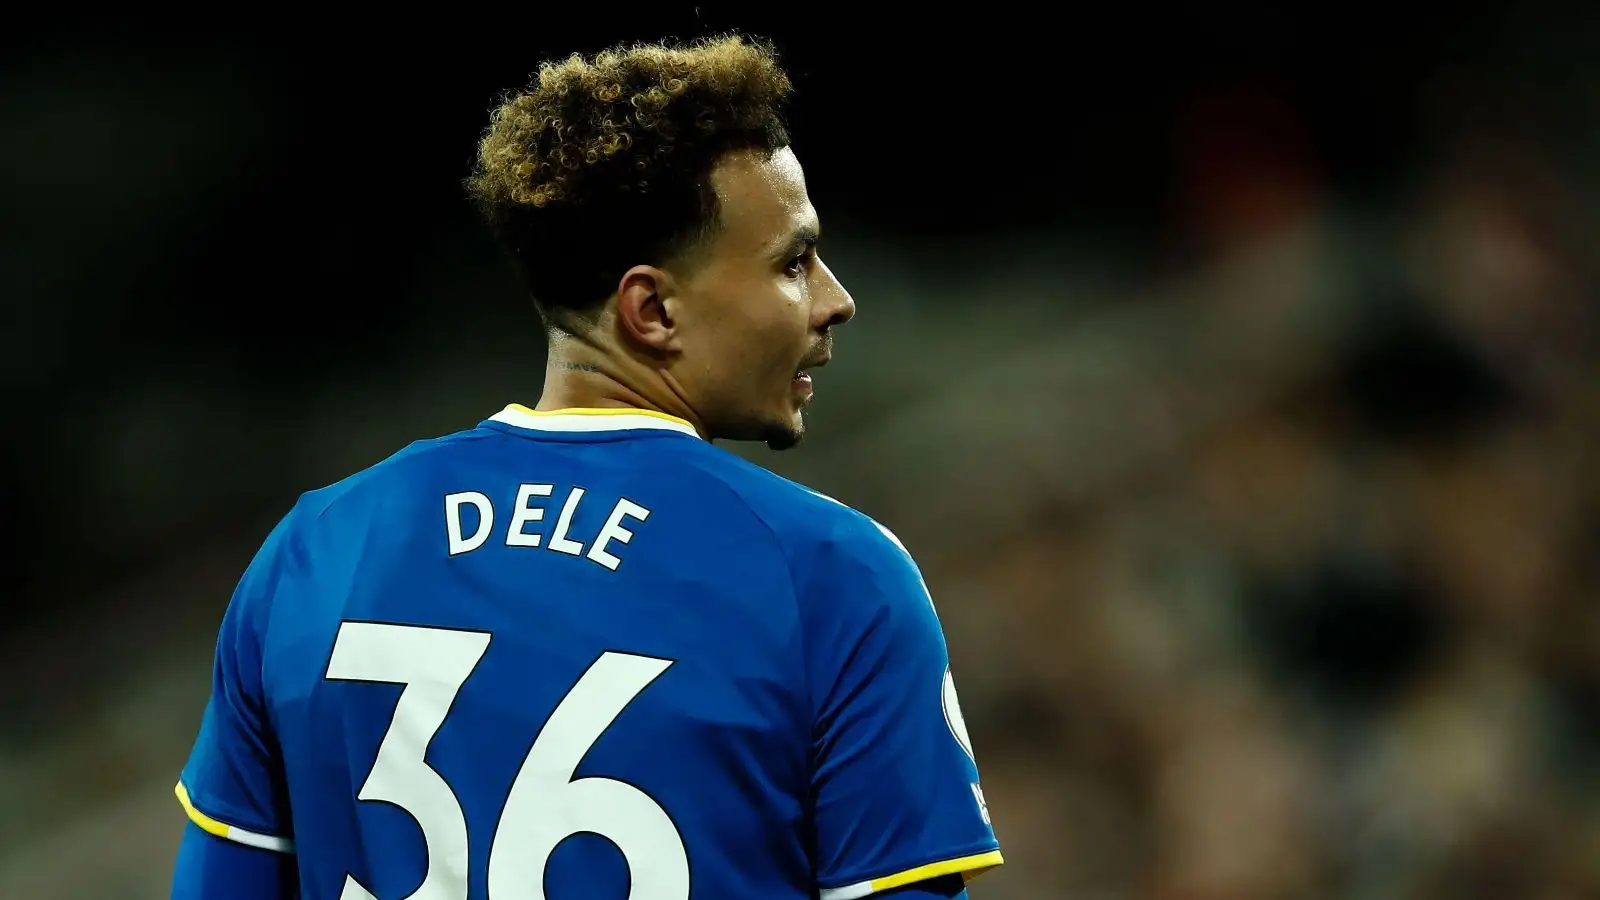 Everton attacking midfielder Dele Alli